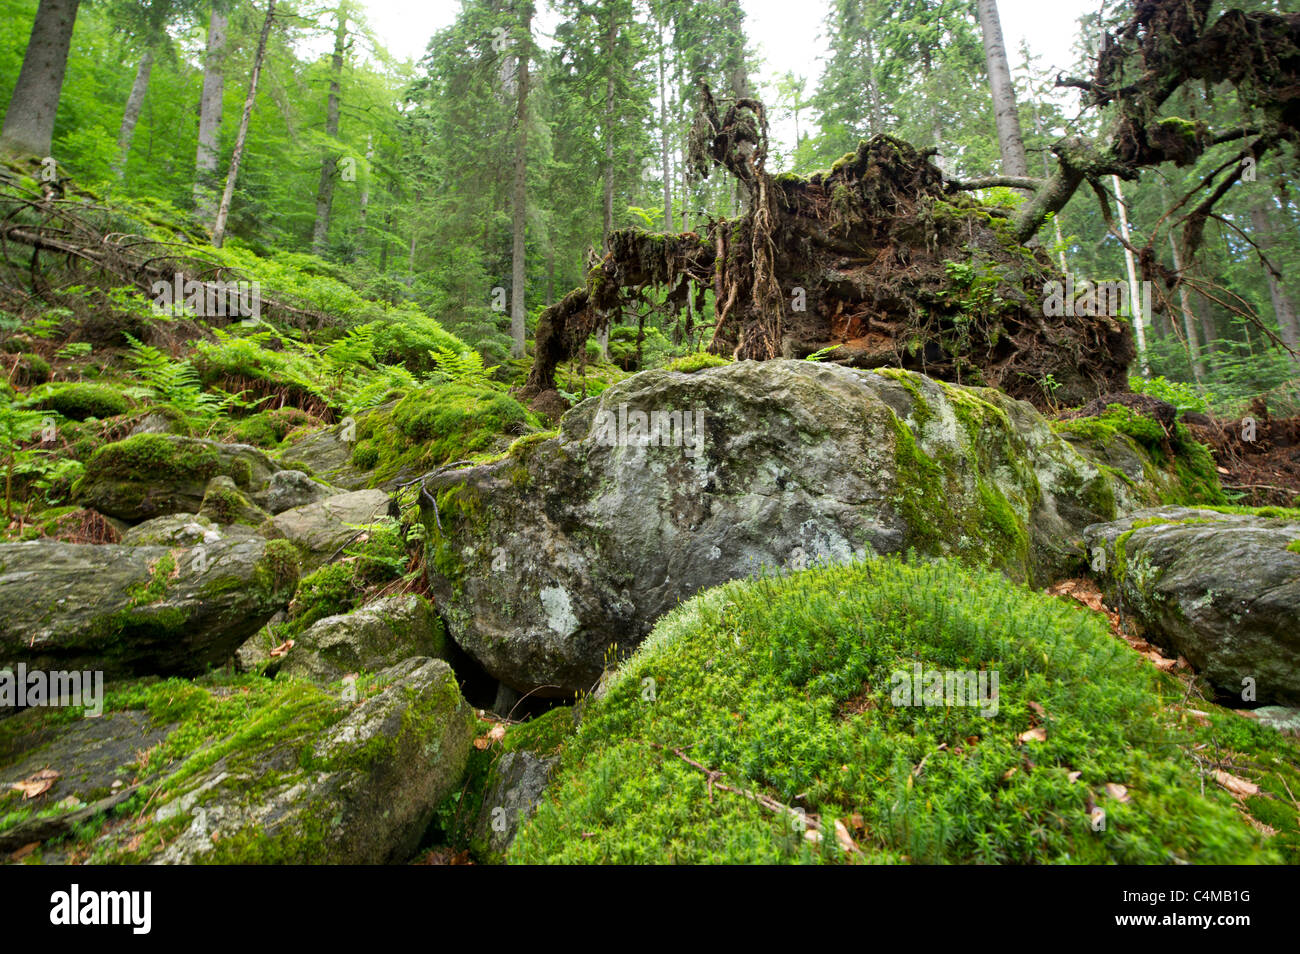 Nationalpark NP Bayerischer Wald Bavarian Forest Mt. Falkenstein Mountain Spruce Forest vacation Mountains rock rocks wood dead Stock Photo